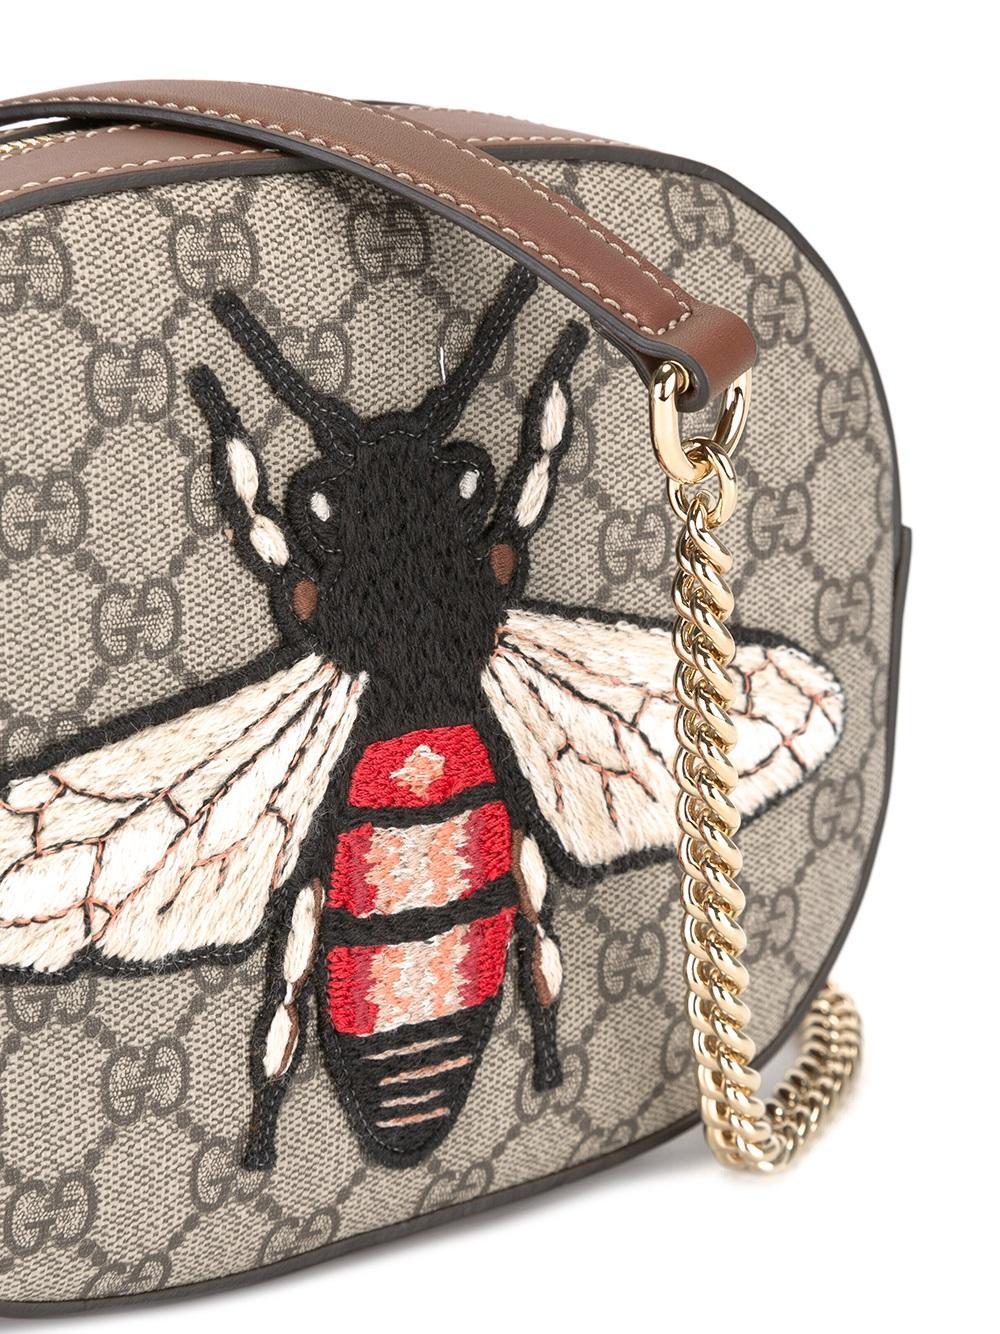 Lyst - Gucci Mini Gg Supreme Bee Bag in Brown